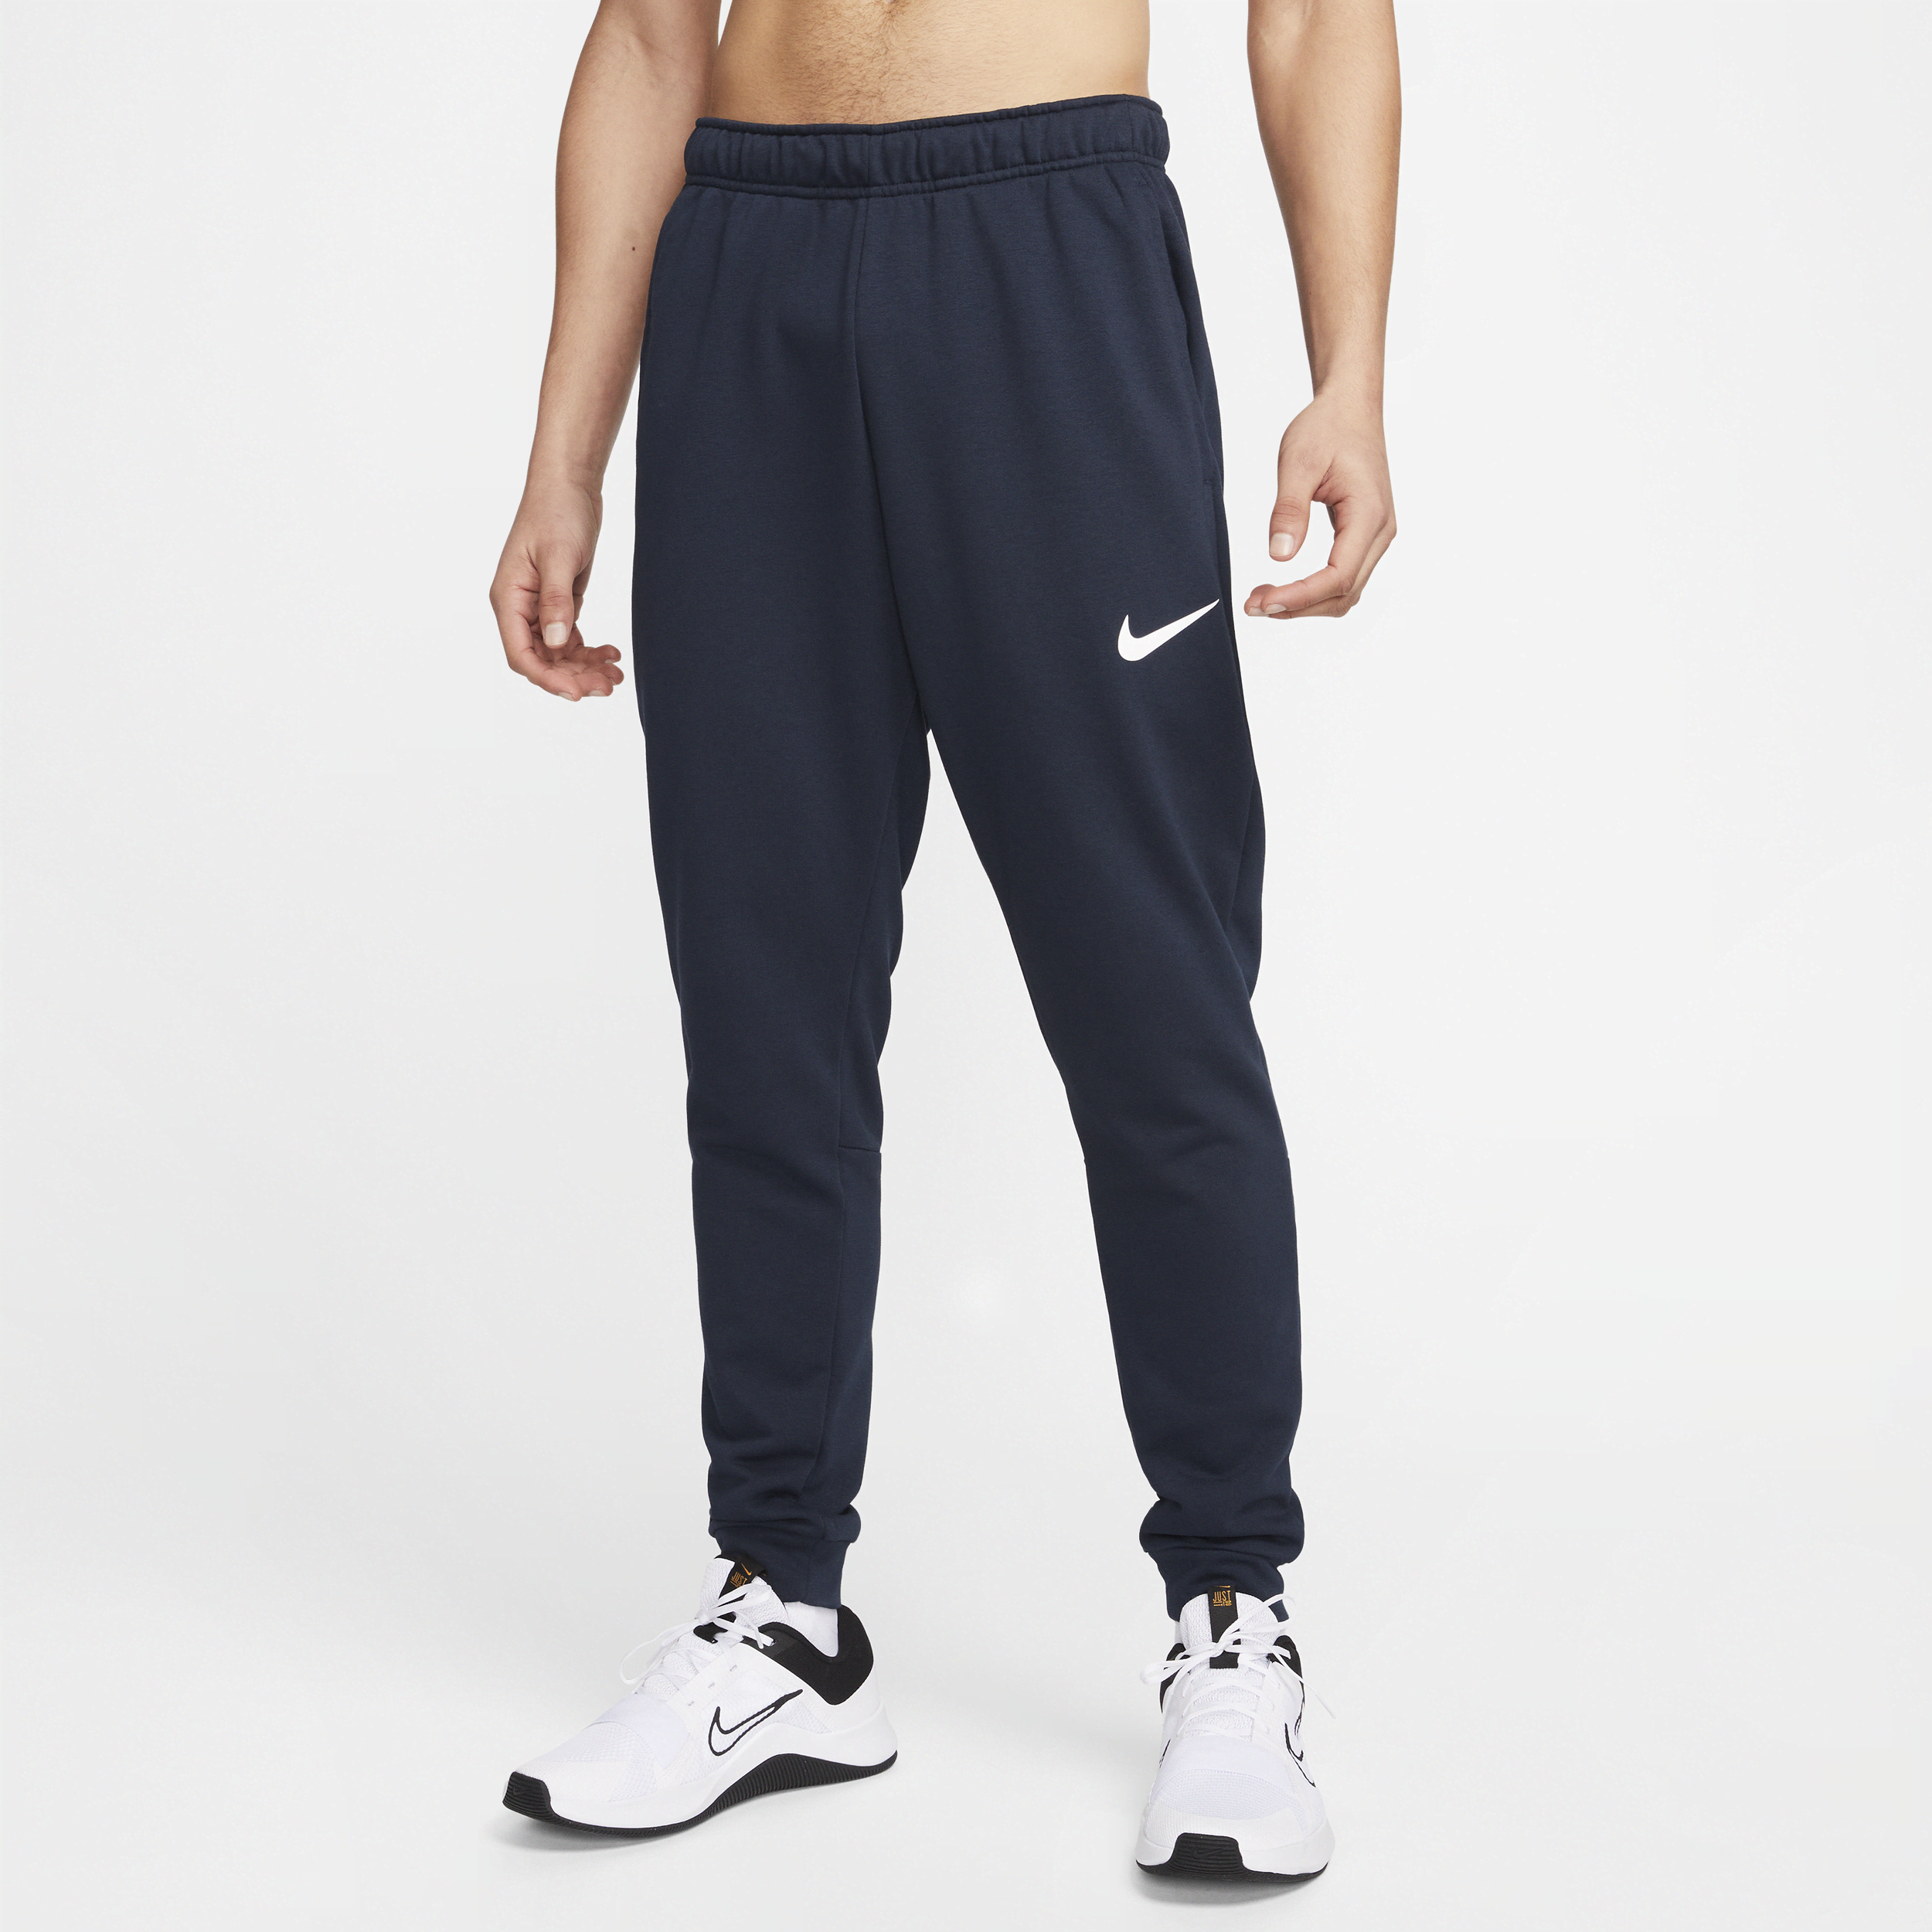 Nike Dry Pantalón Dri-FIT ceñido de tejido Fleece - Hombre - Azul